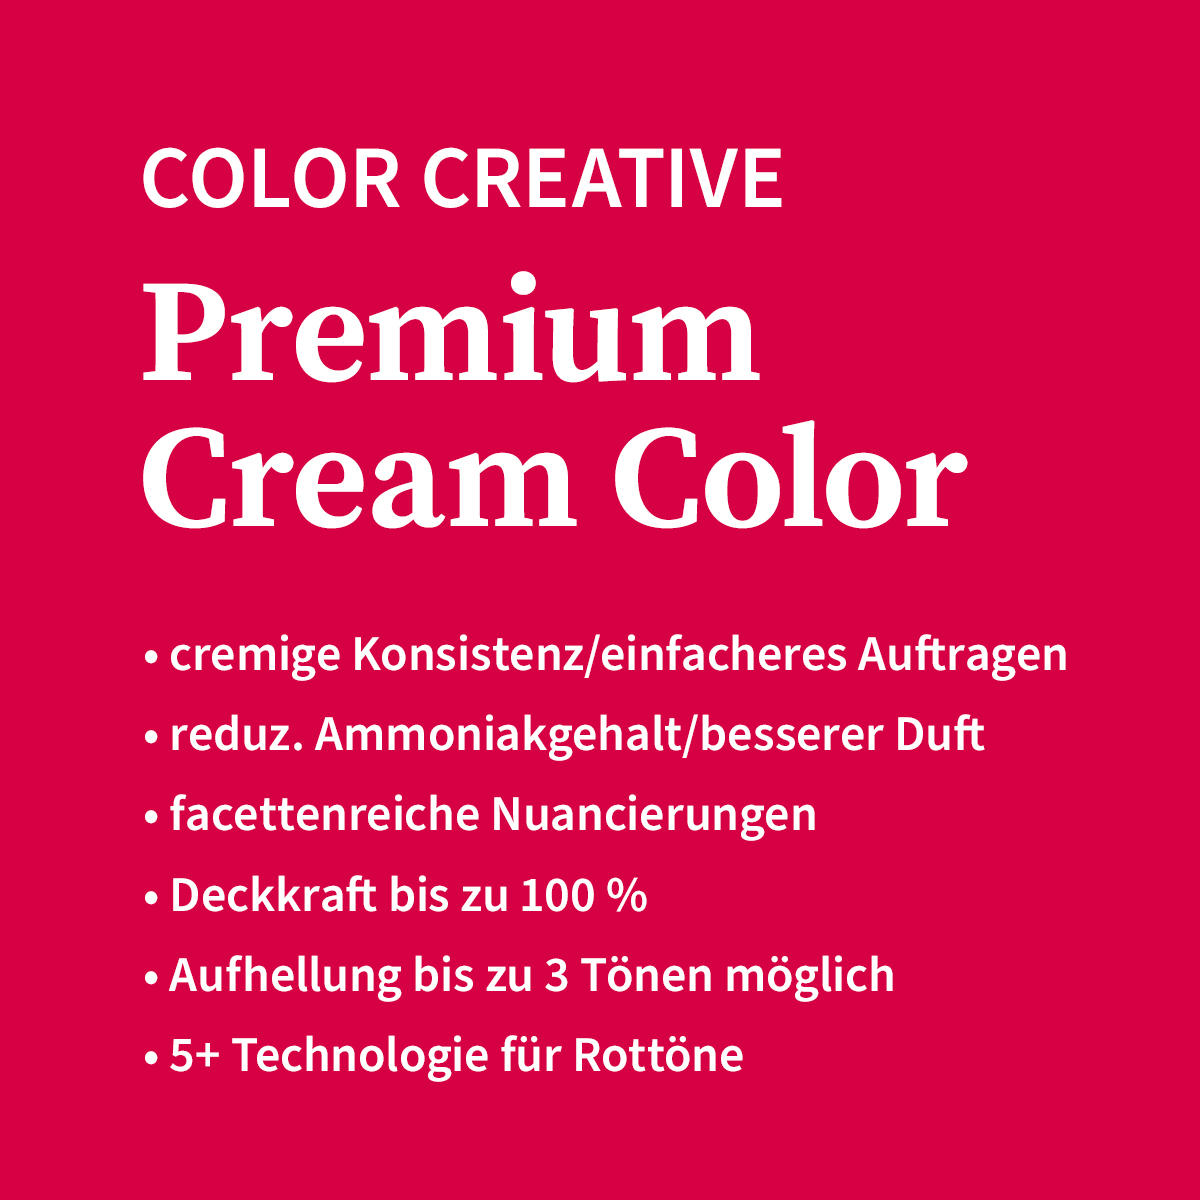 Basler Color Creative Premium Cream Color 8/1 rubio claro ceniza, tubo 60 ml - 4